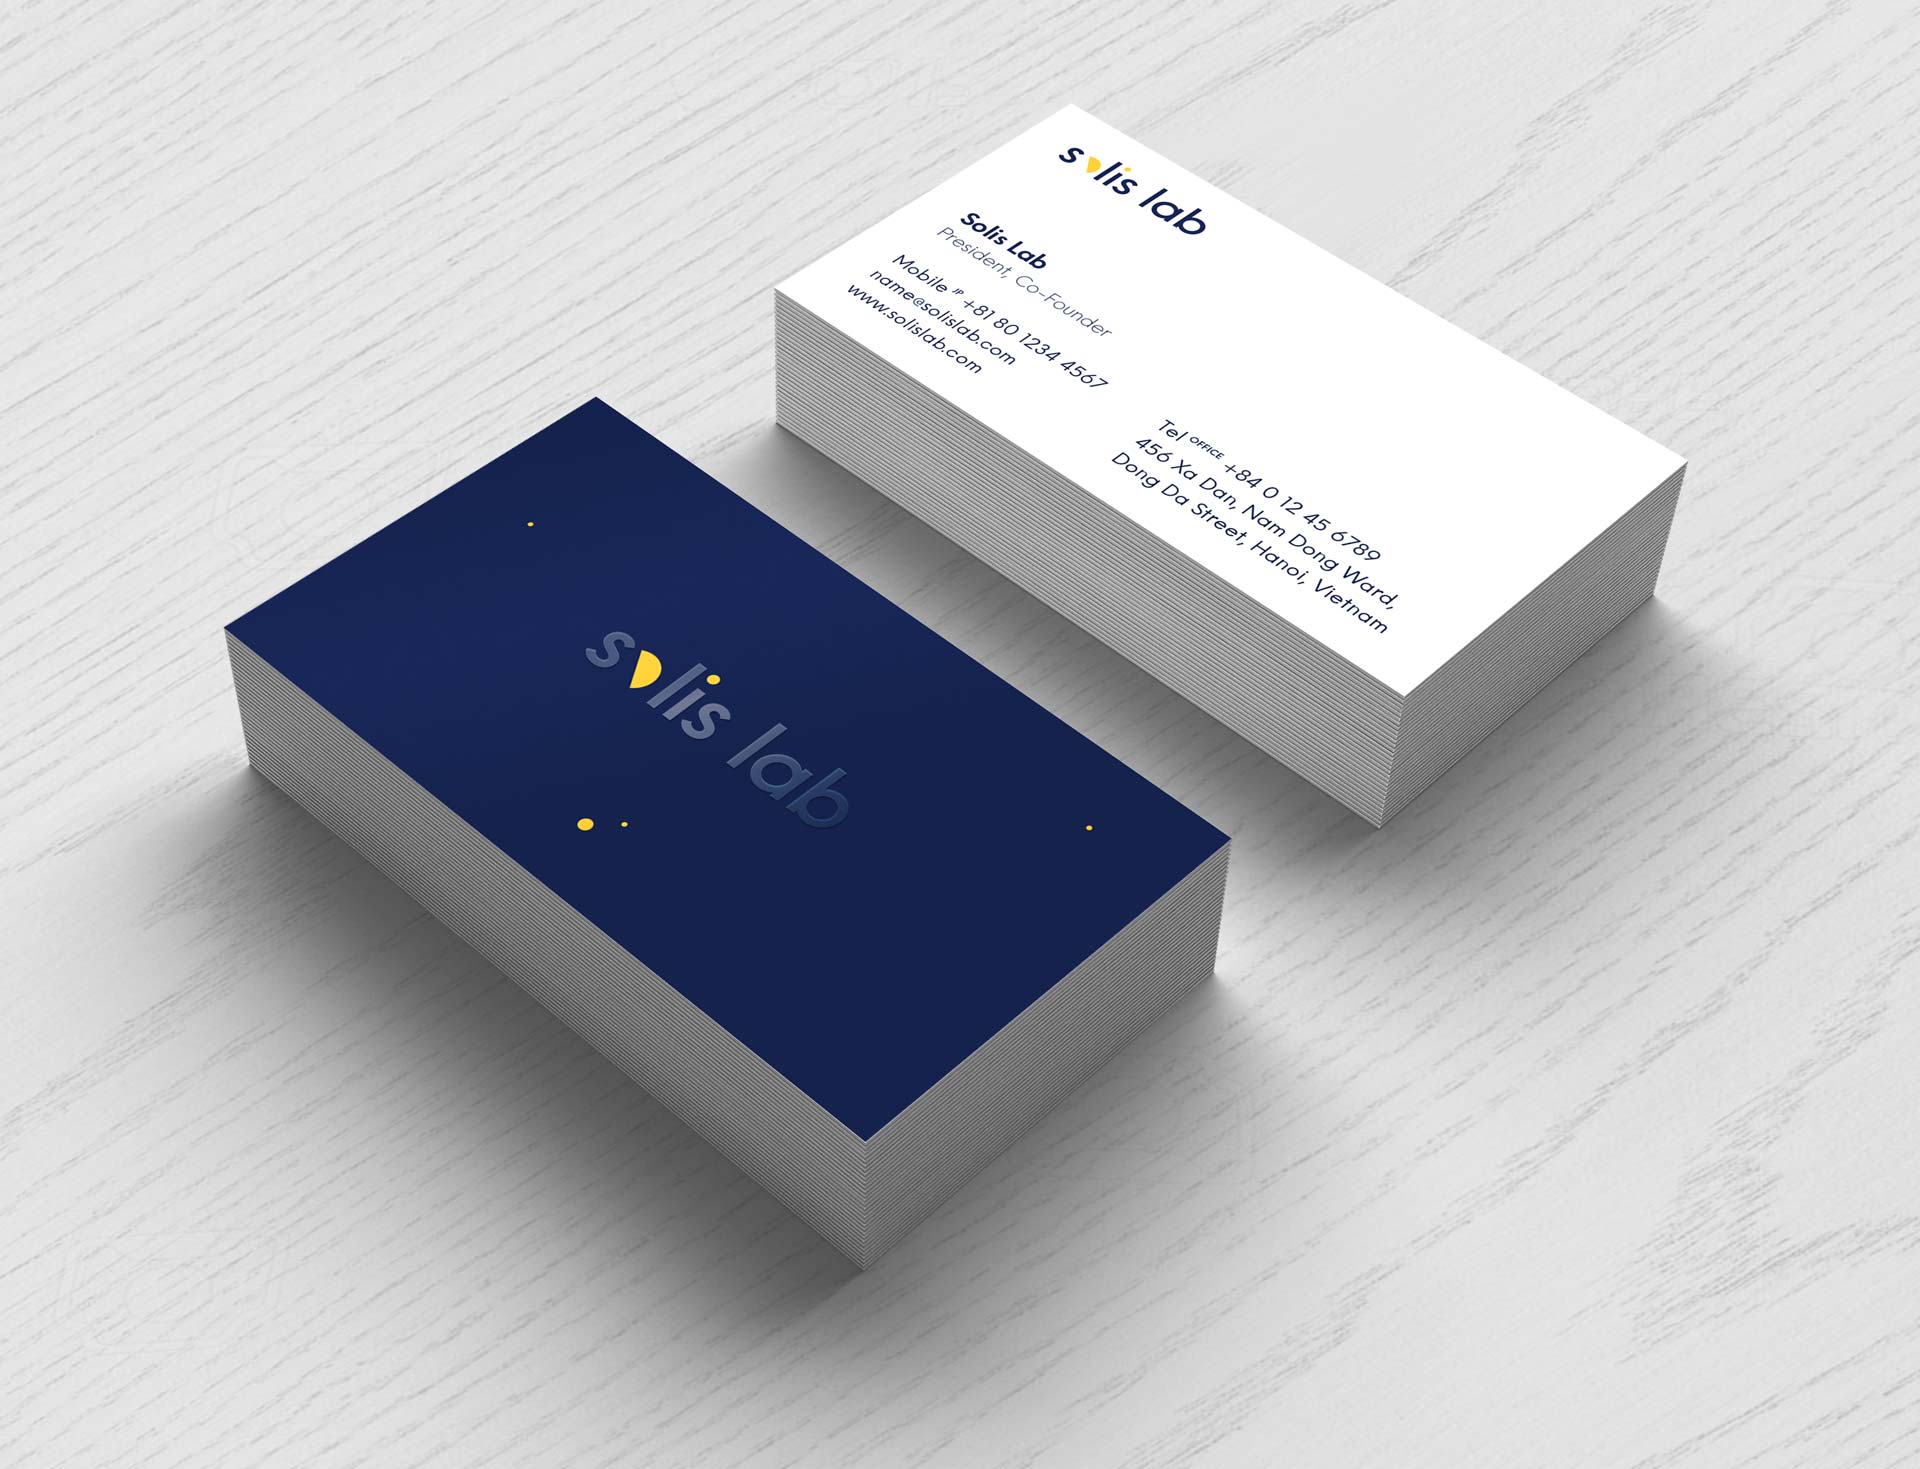 solis lab - business card design